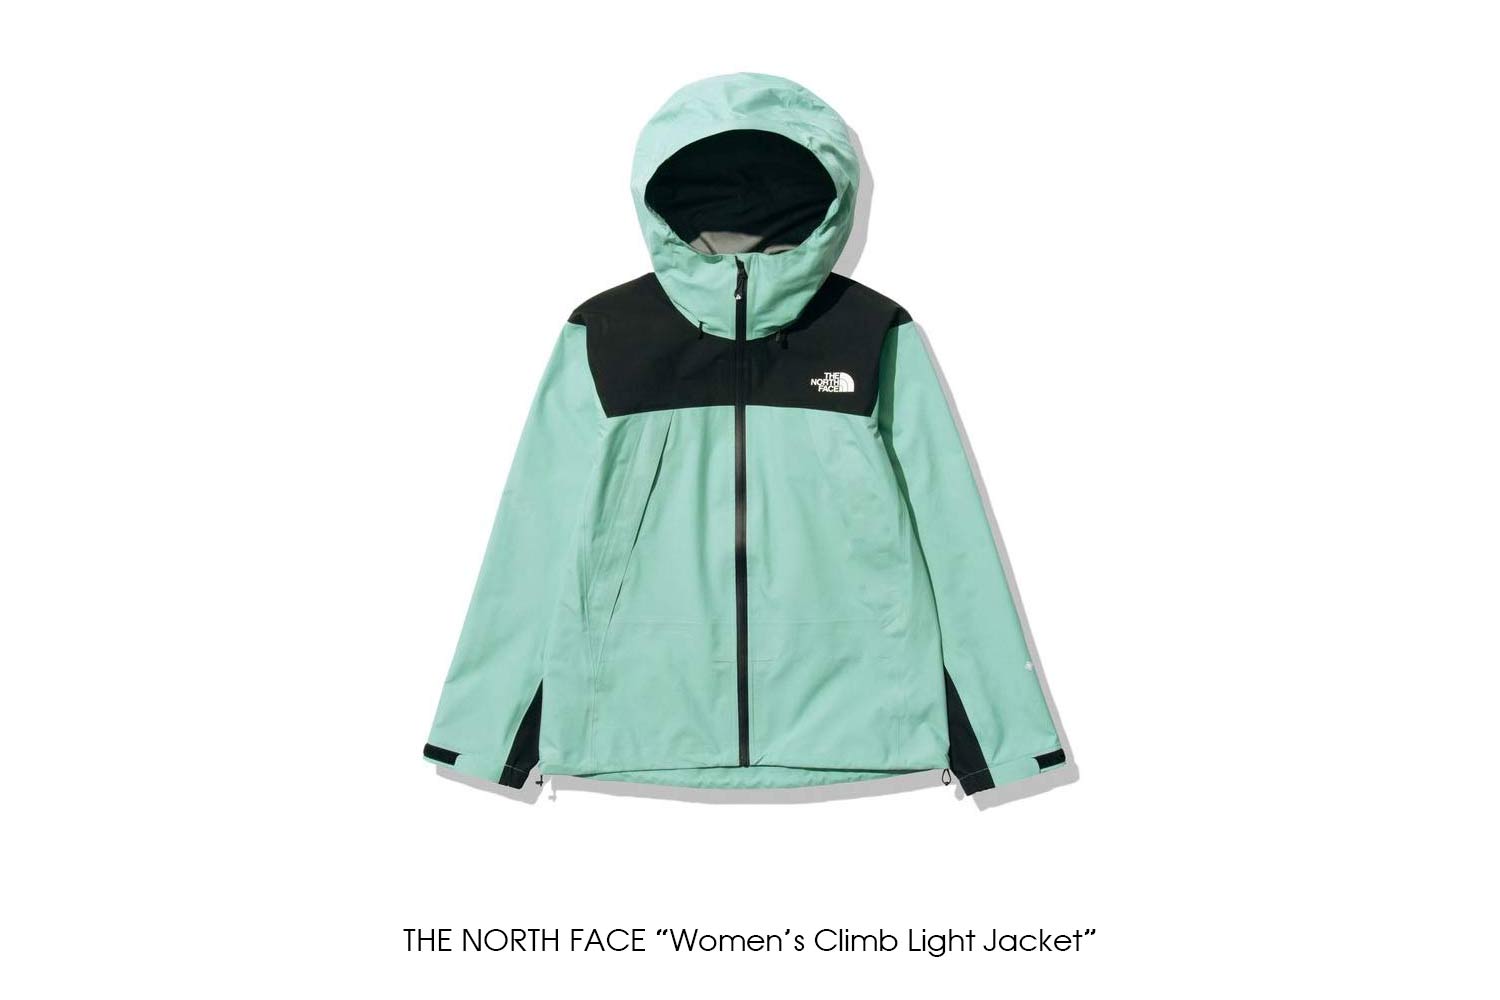 THE NORTH FACE "Women's Climb Light Jacket"